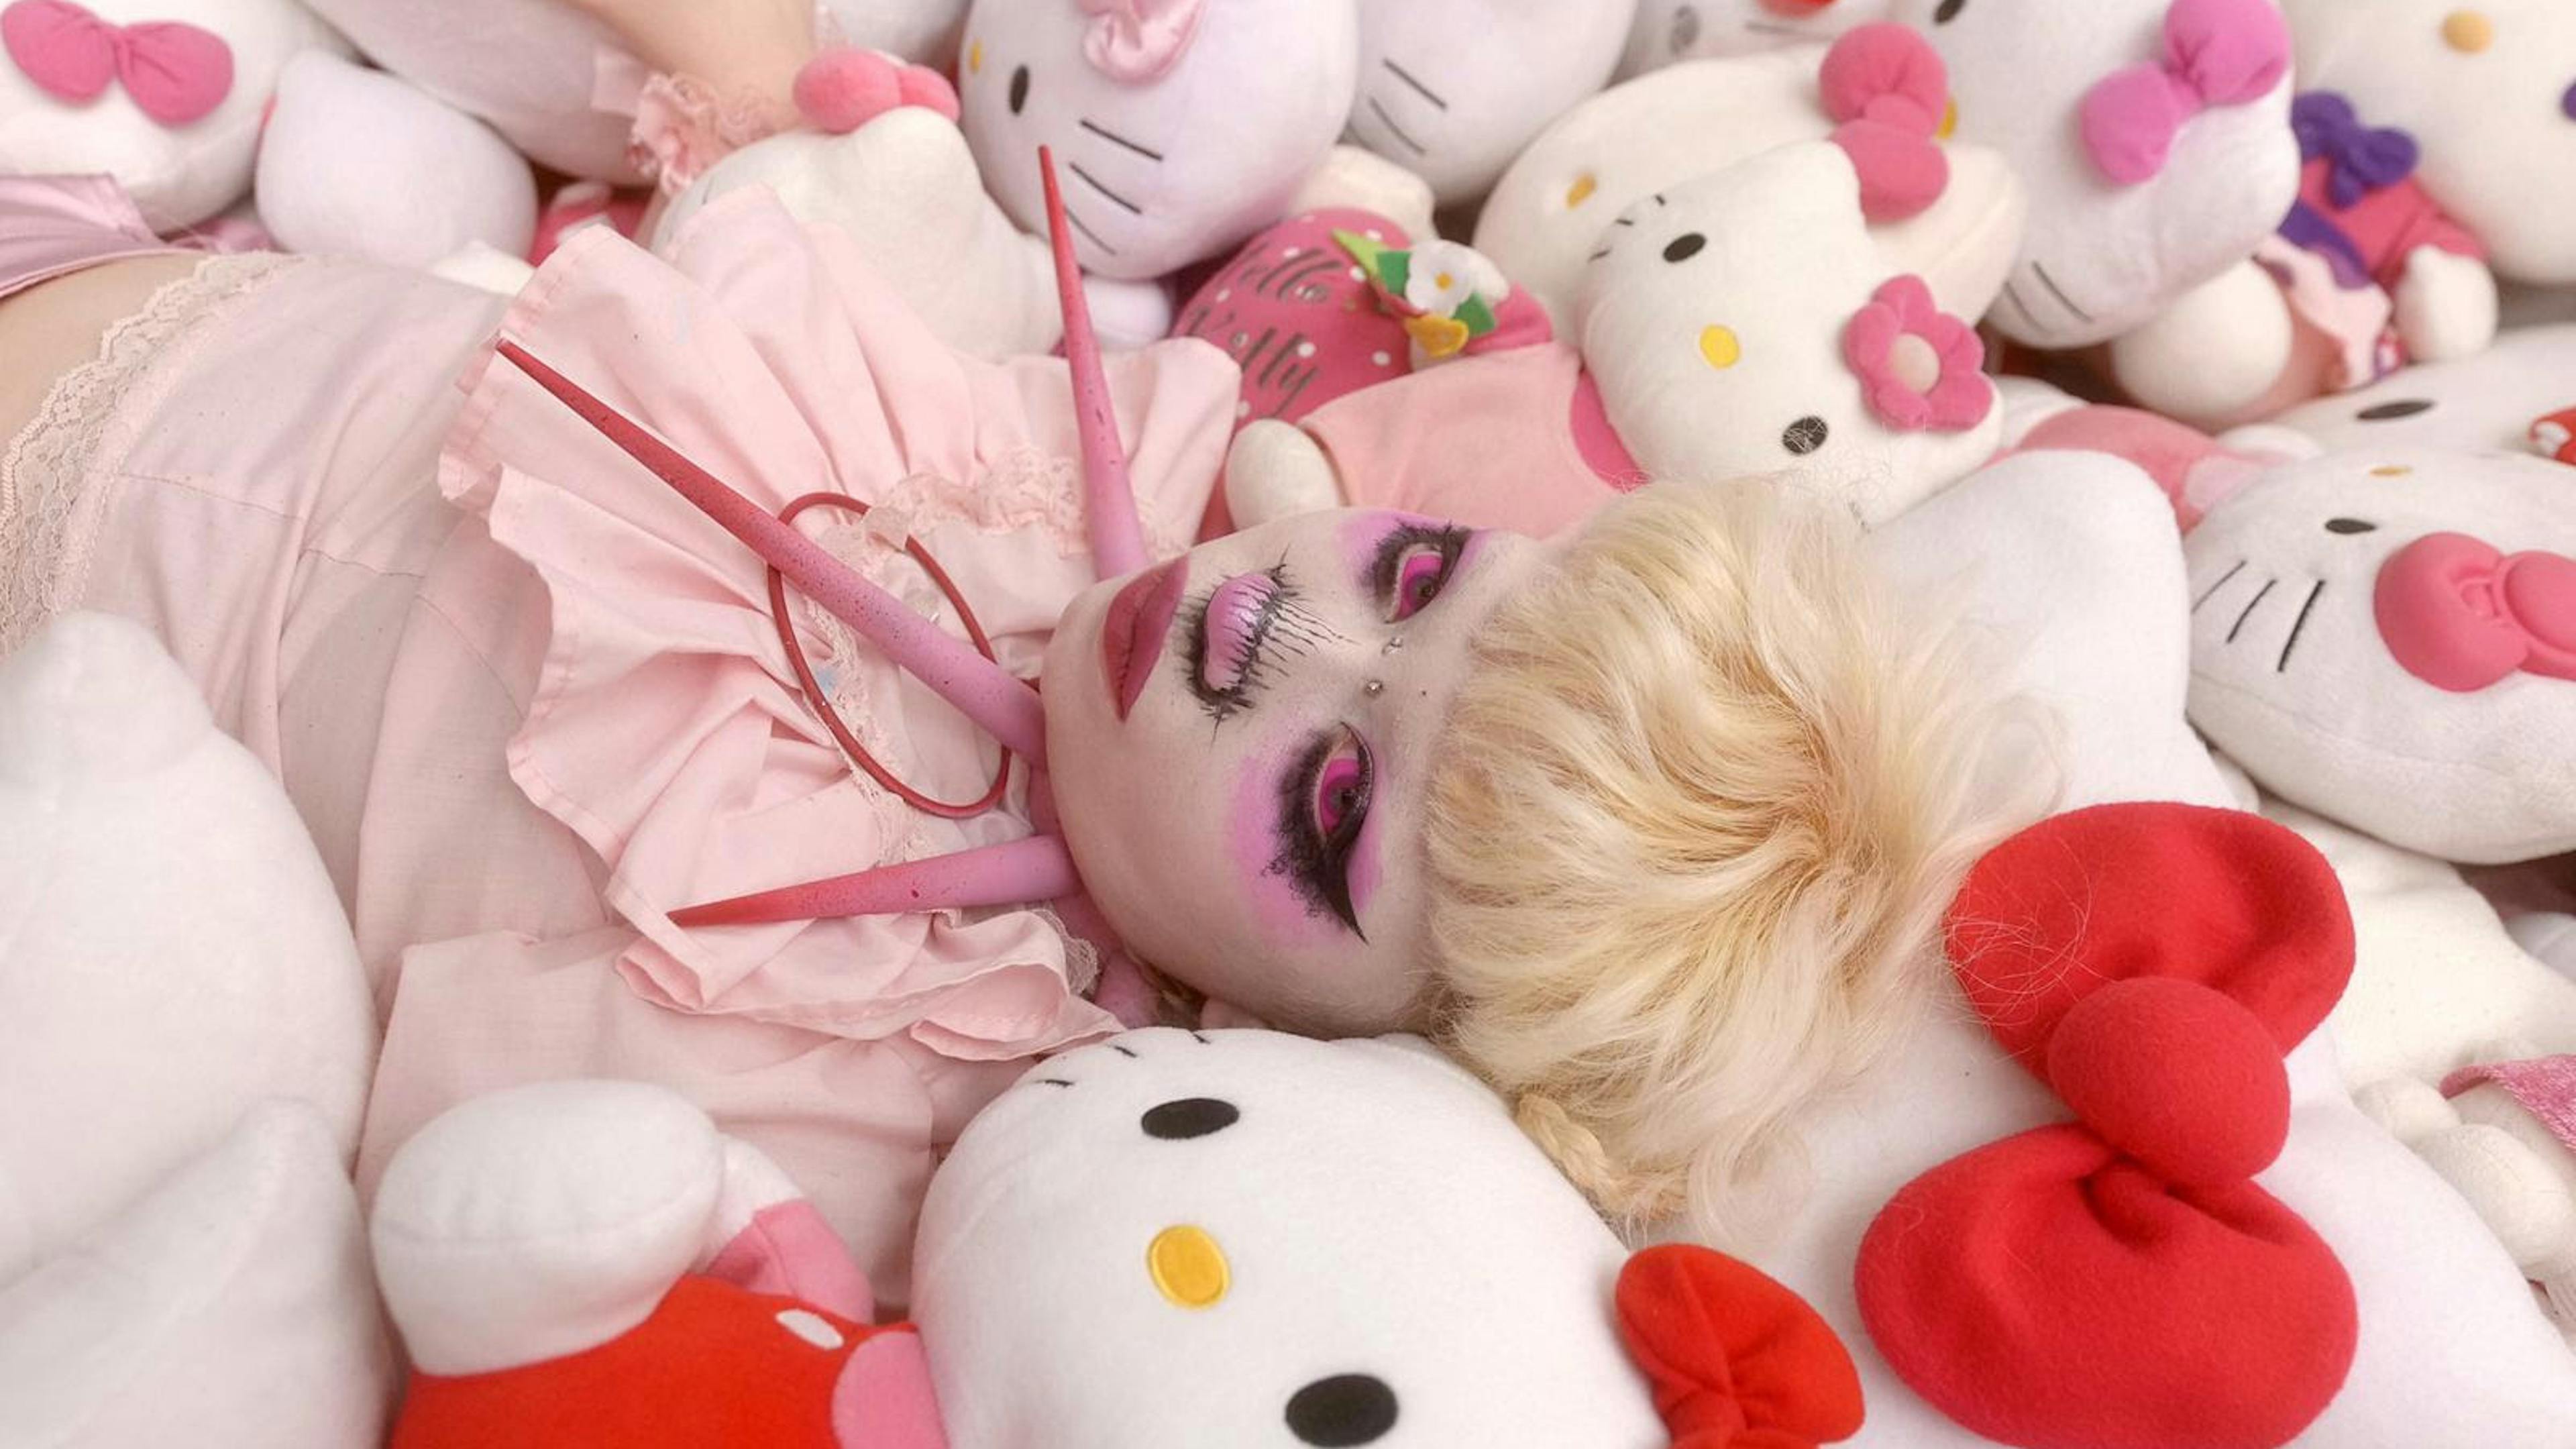 Jazmin Bean releases creepy video for Hello Kitty